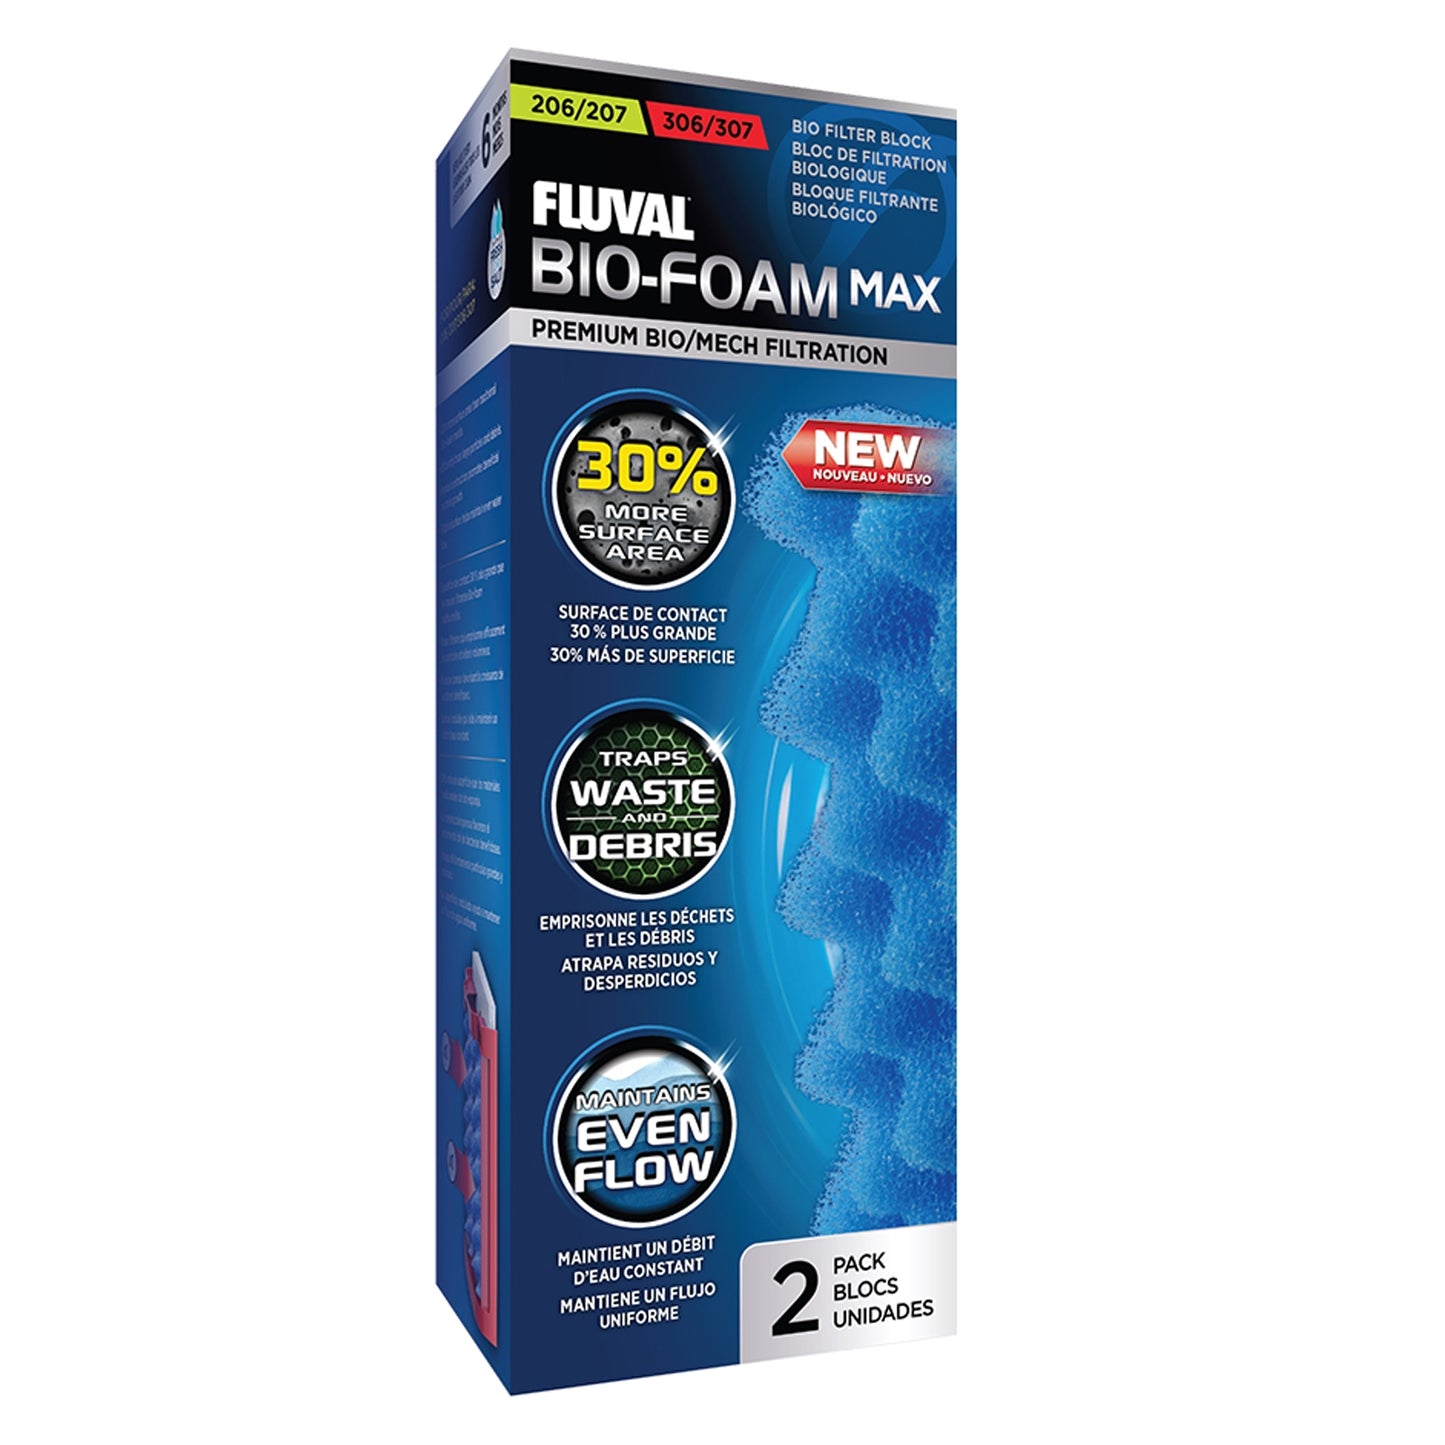 Fluval 207/307 and 206/306 Bio-Foam Max - 2 pack